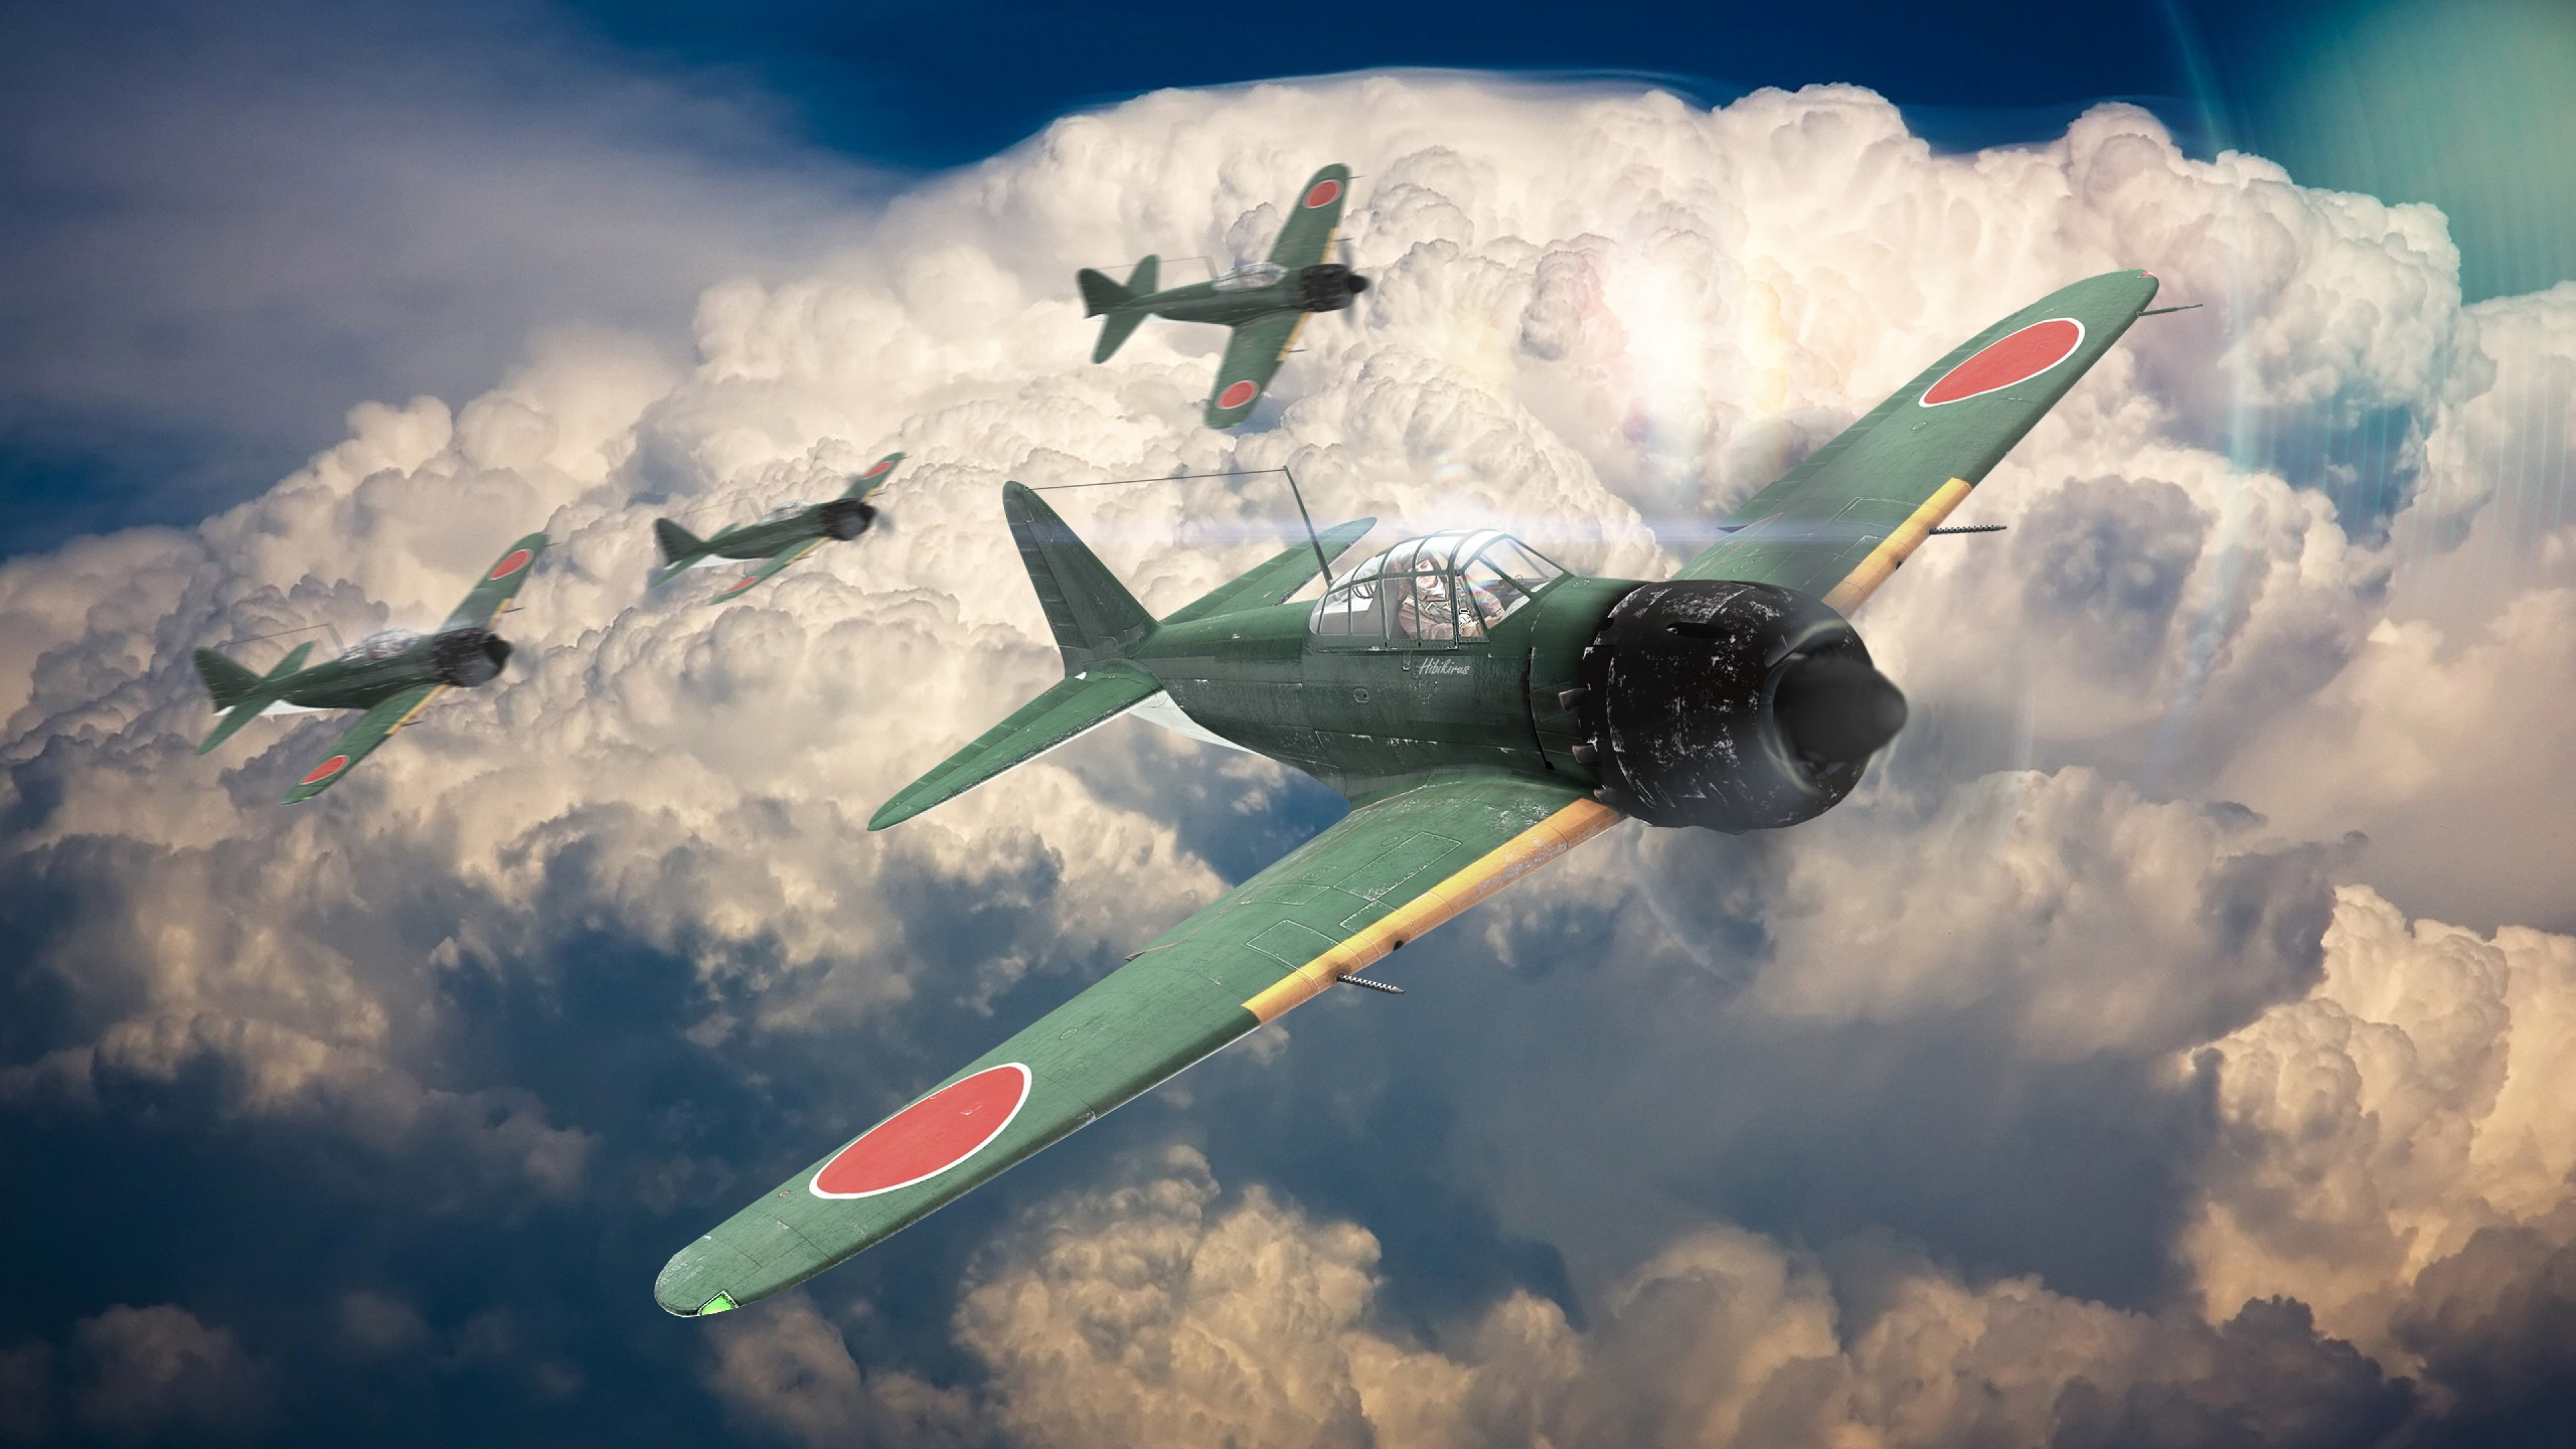 Download 3840x2160 War Thunder, Aircrafts, Sky, Mitsubishi A6m Zero, Clouds, Artwork Wallpaper for UHD TV